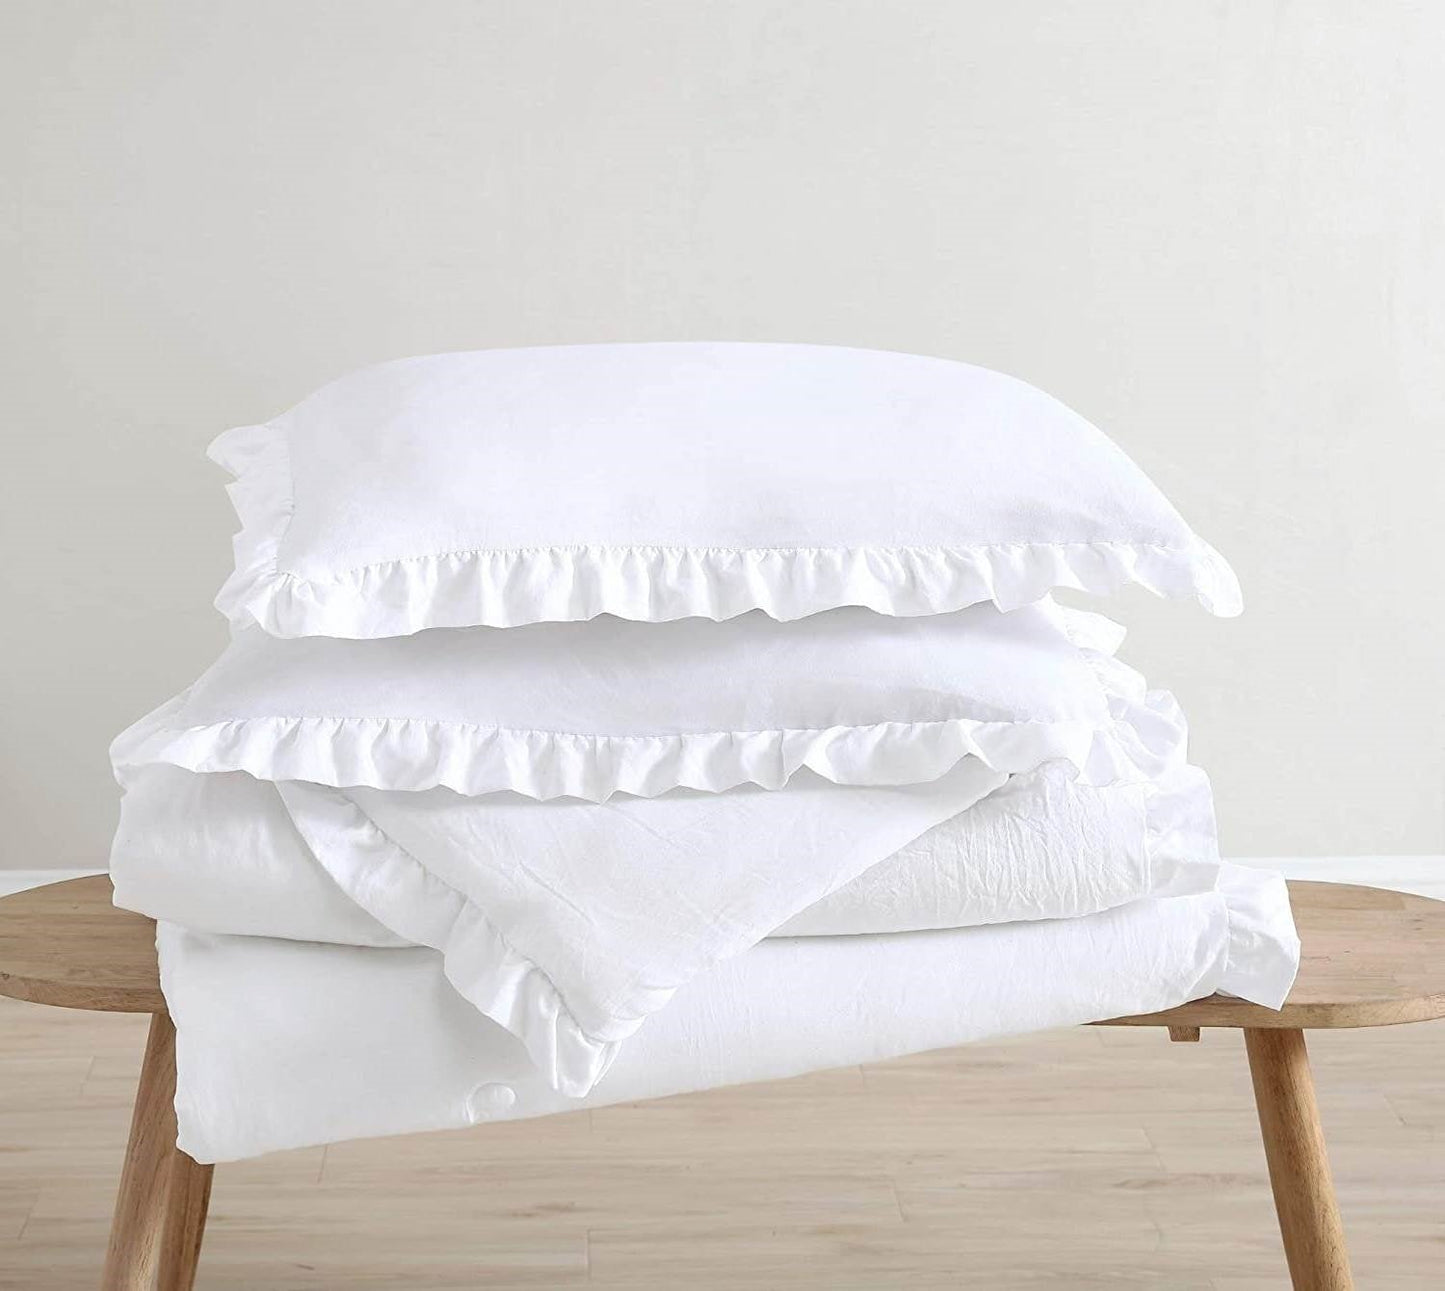 Bedroom > Comforters And Sets - Queen Size White Ruffled Edge Microfiber Comforter Set